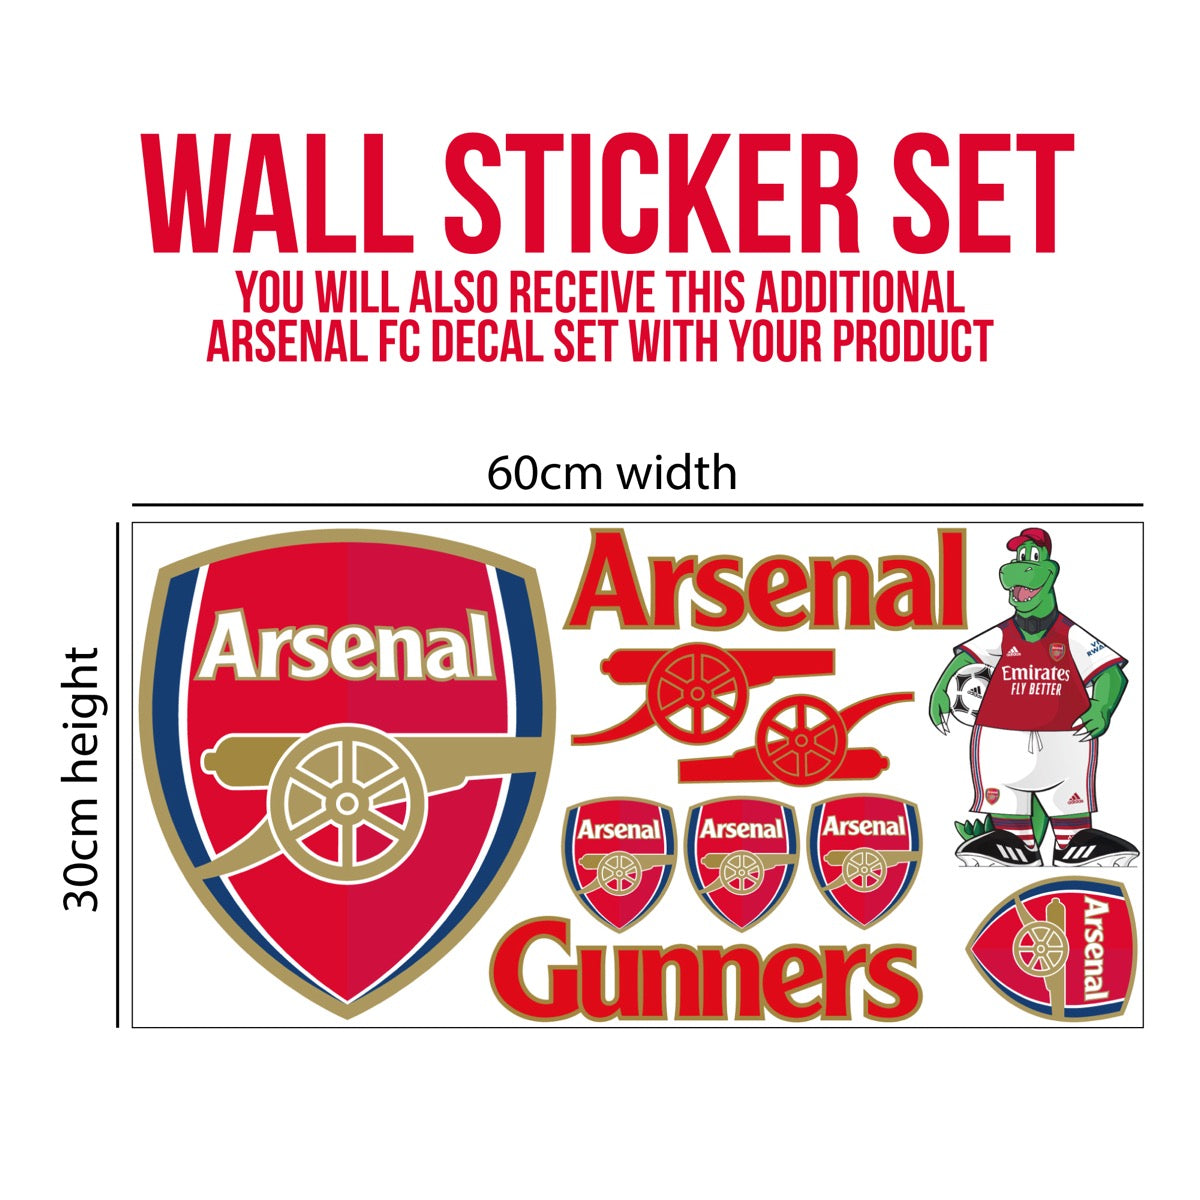 Arsenal Football Club - Emirates Stadium Outside Lights View Mural + Gunners Wall Sticker Set